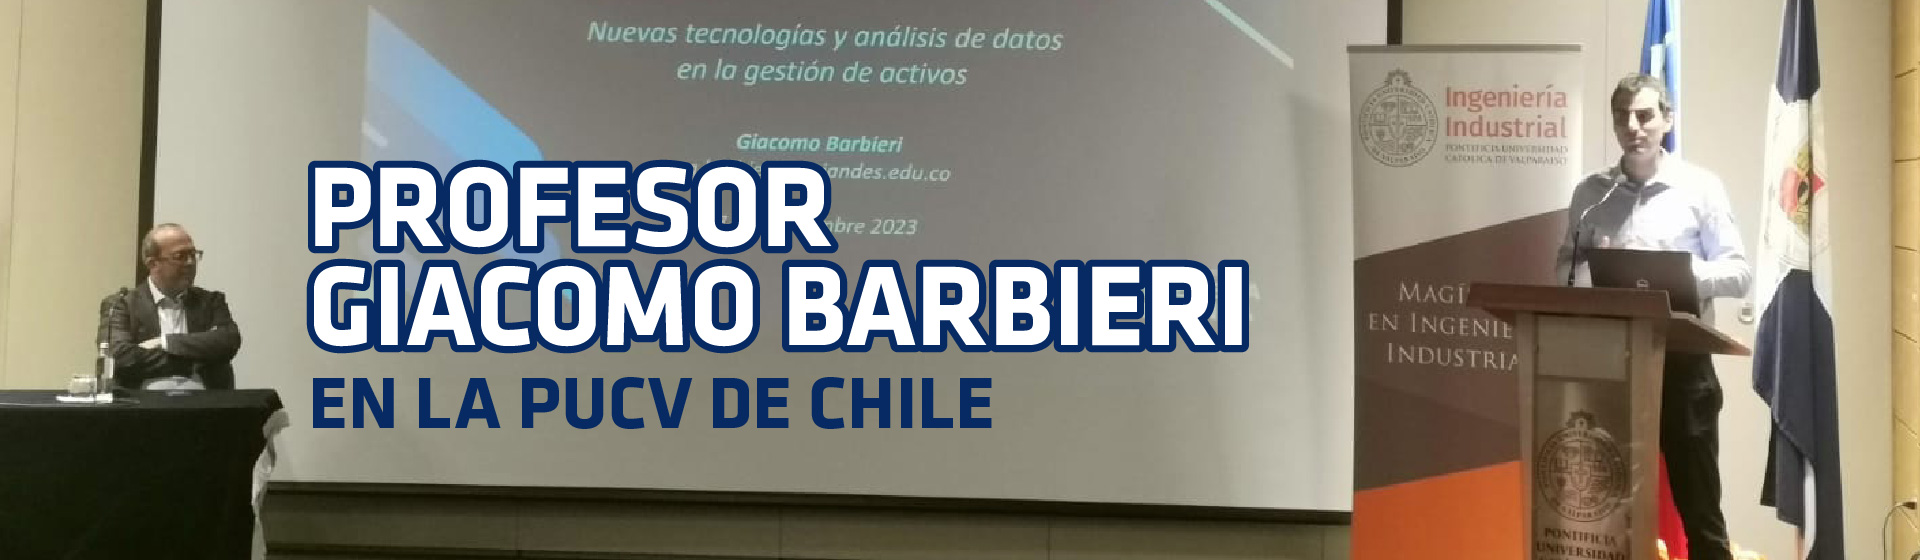 Profesor Giacomo Barbieri en la PUCV de Chile